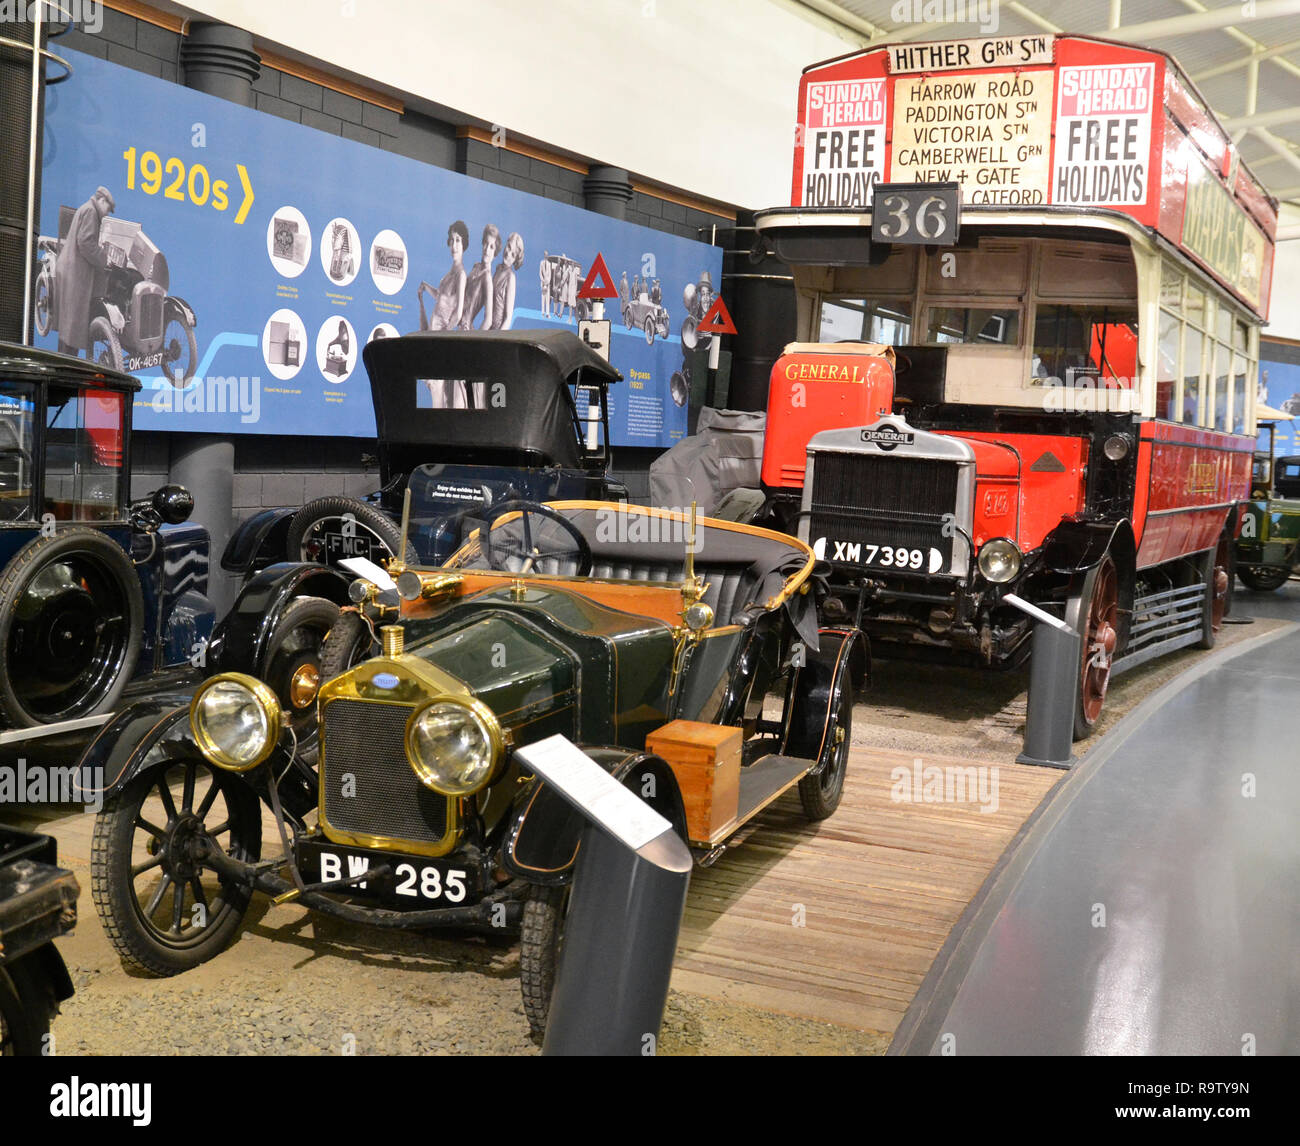 1920s car and vintage bus at the British Motor Museum, Gaydon, Warwickshire, UK Stock Photo